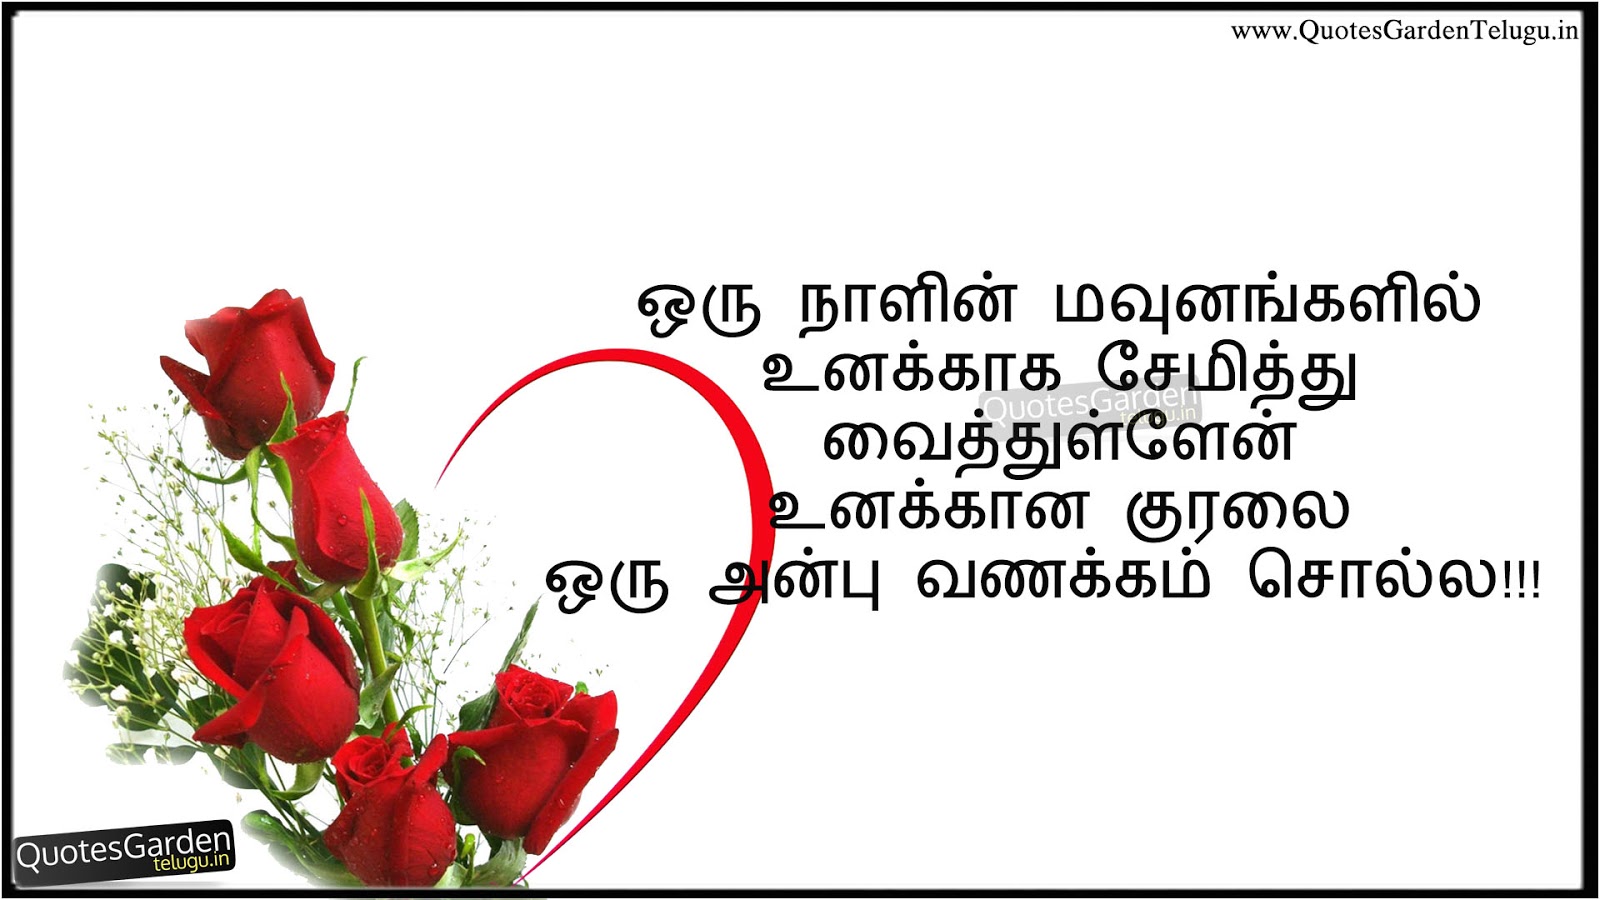 iniya malai Vanakkam Tamil Greetings Quotes | QUOTES GARDEN TELUGU ...